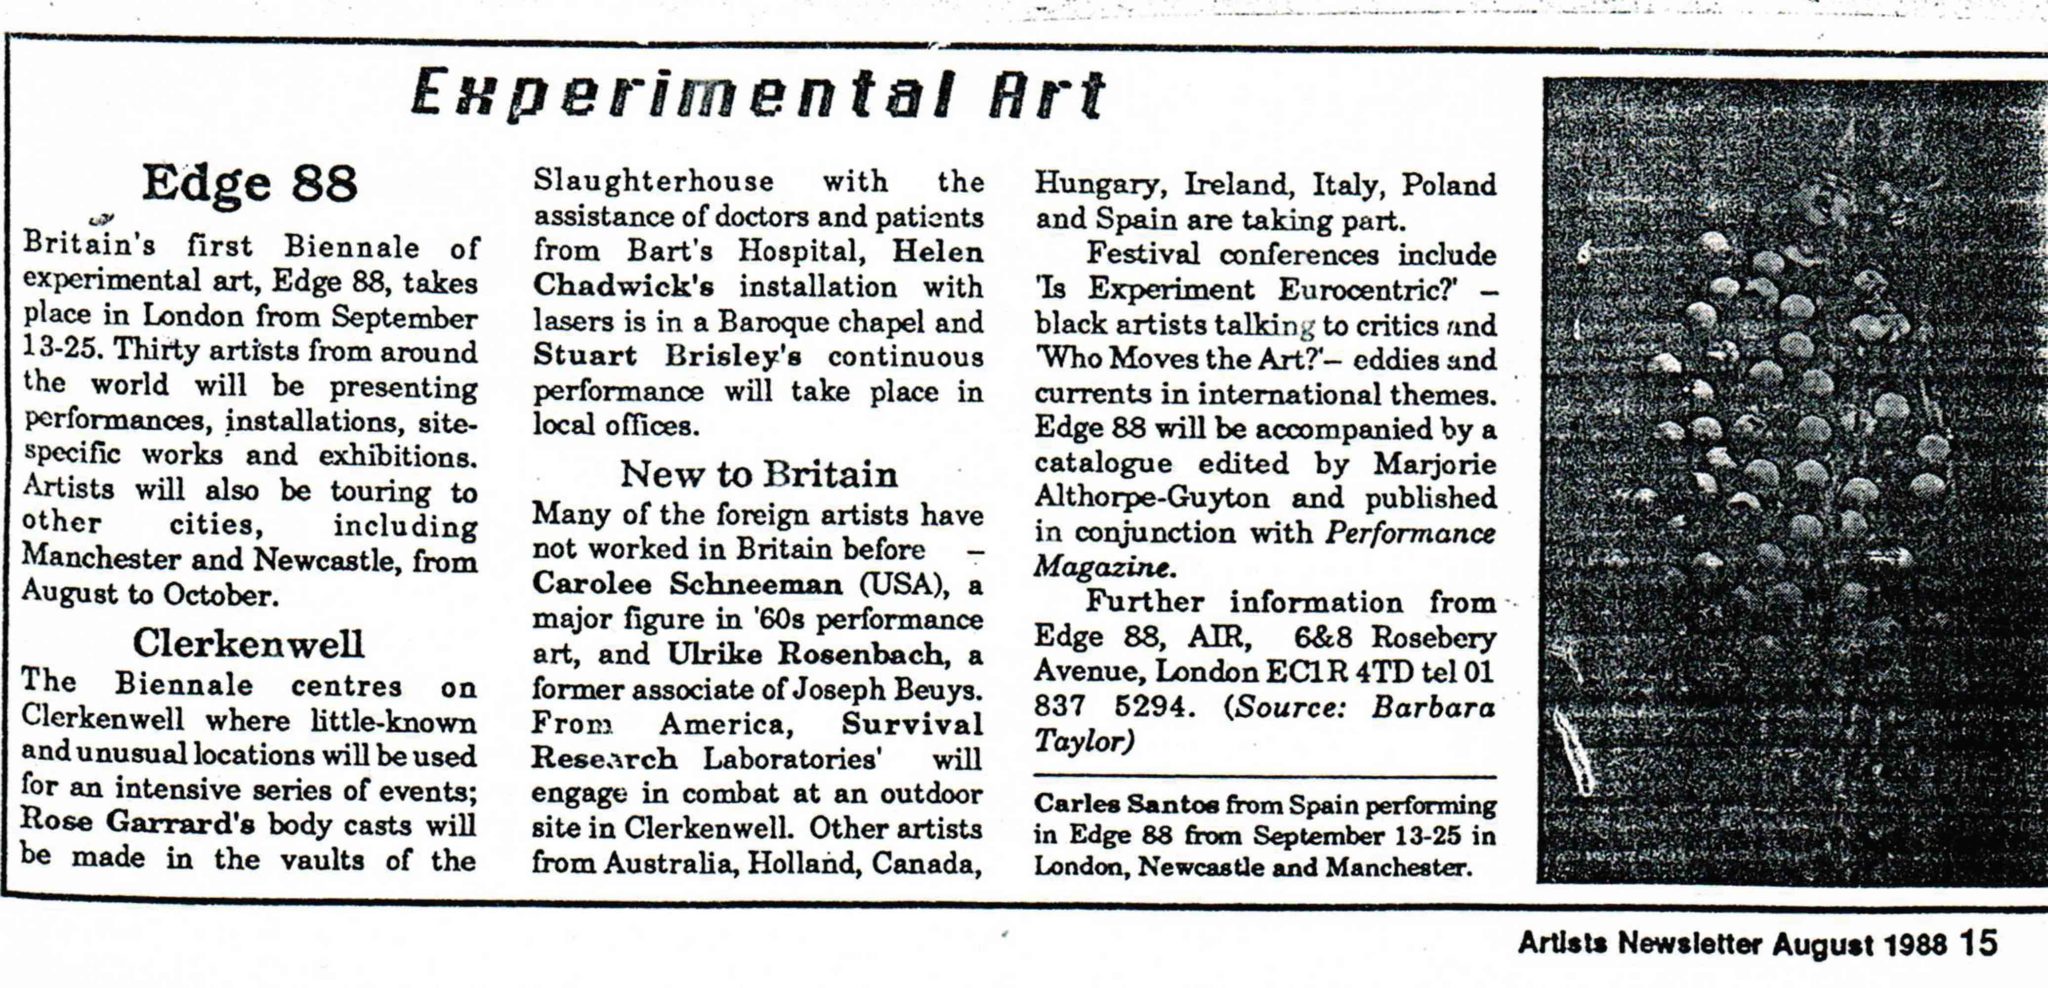 Article, Experimental Art - Edge 88, Artists Newsletter, August 1988